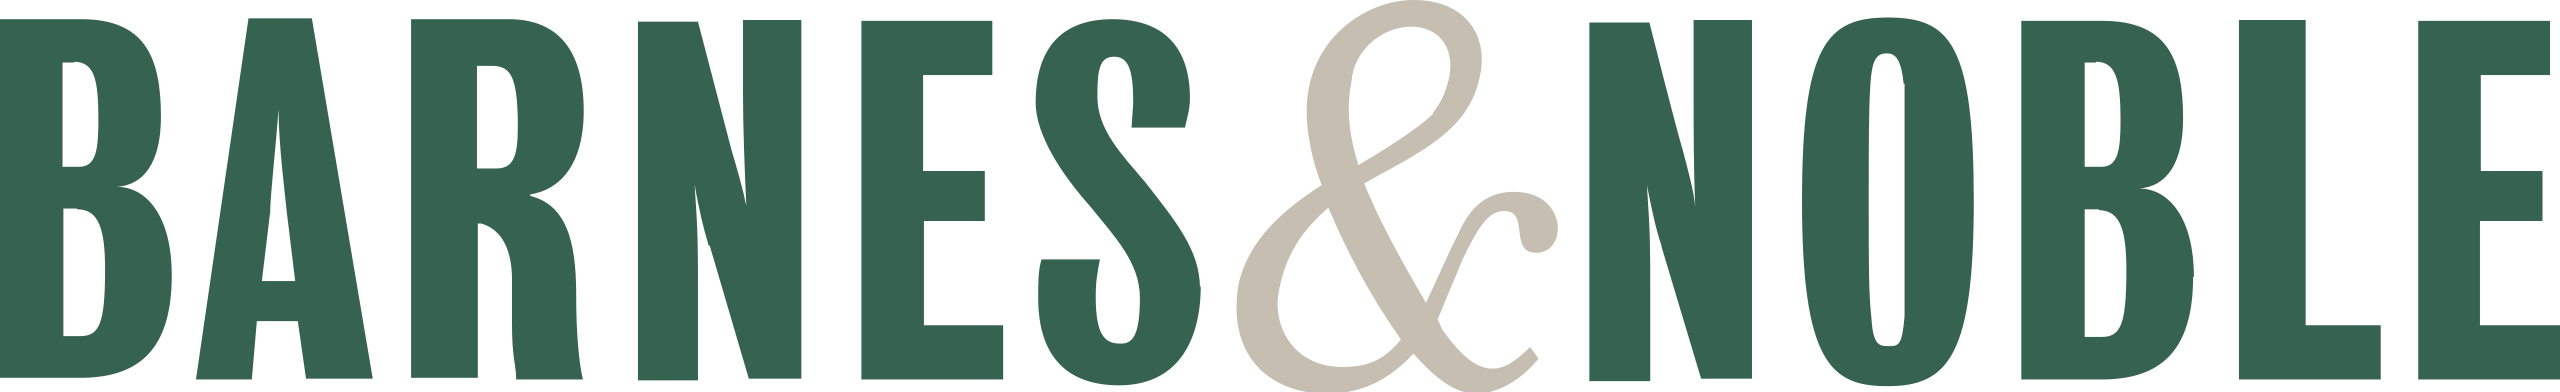 2560px-Barnes_&_Noble_logo.svg